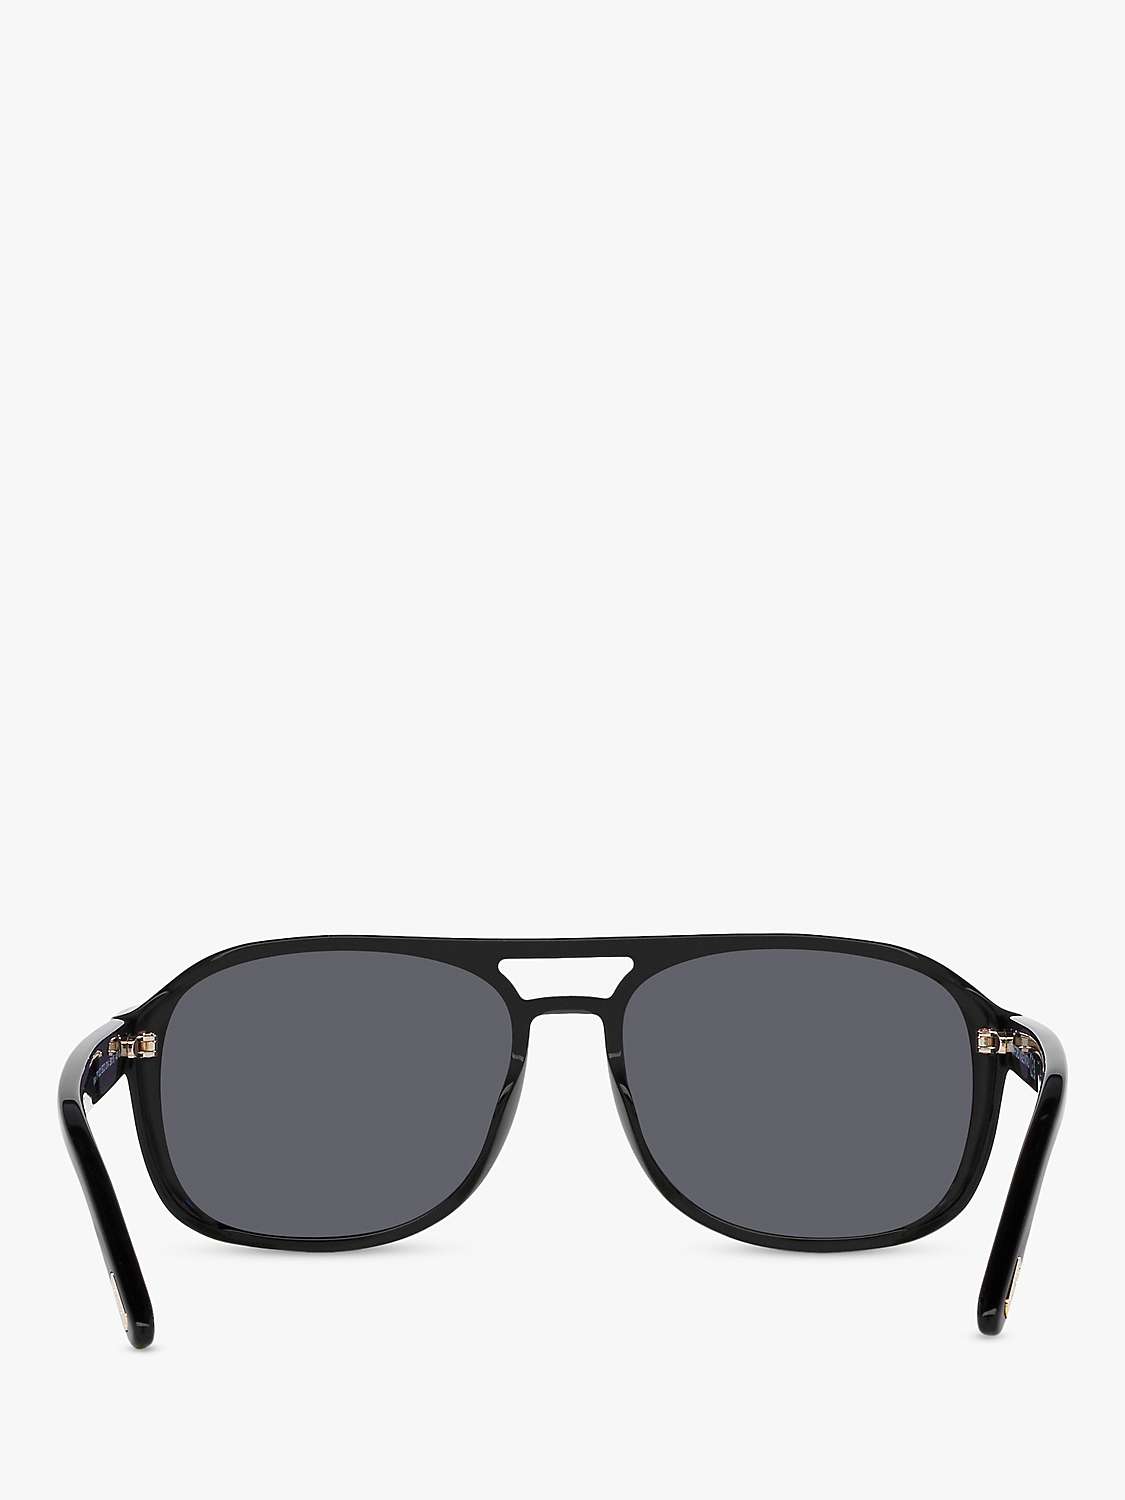 Buy TOM FORD TF1022 Men's Rosco Square Sunglasses, Shiny Black/Grey Online at johnlewis.com